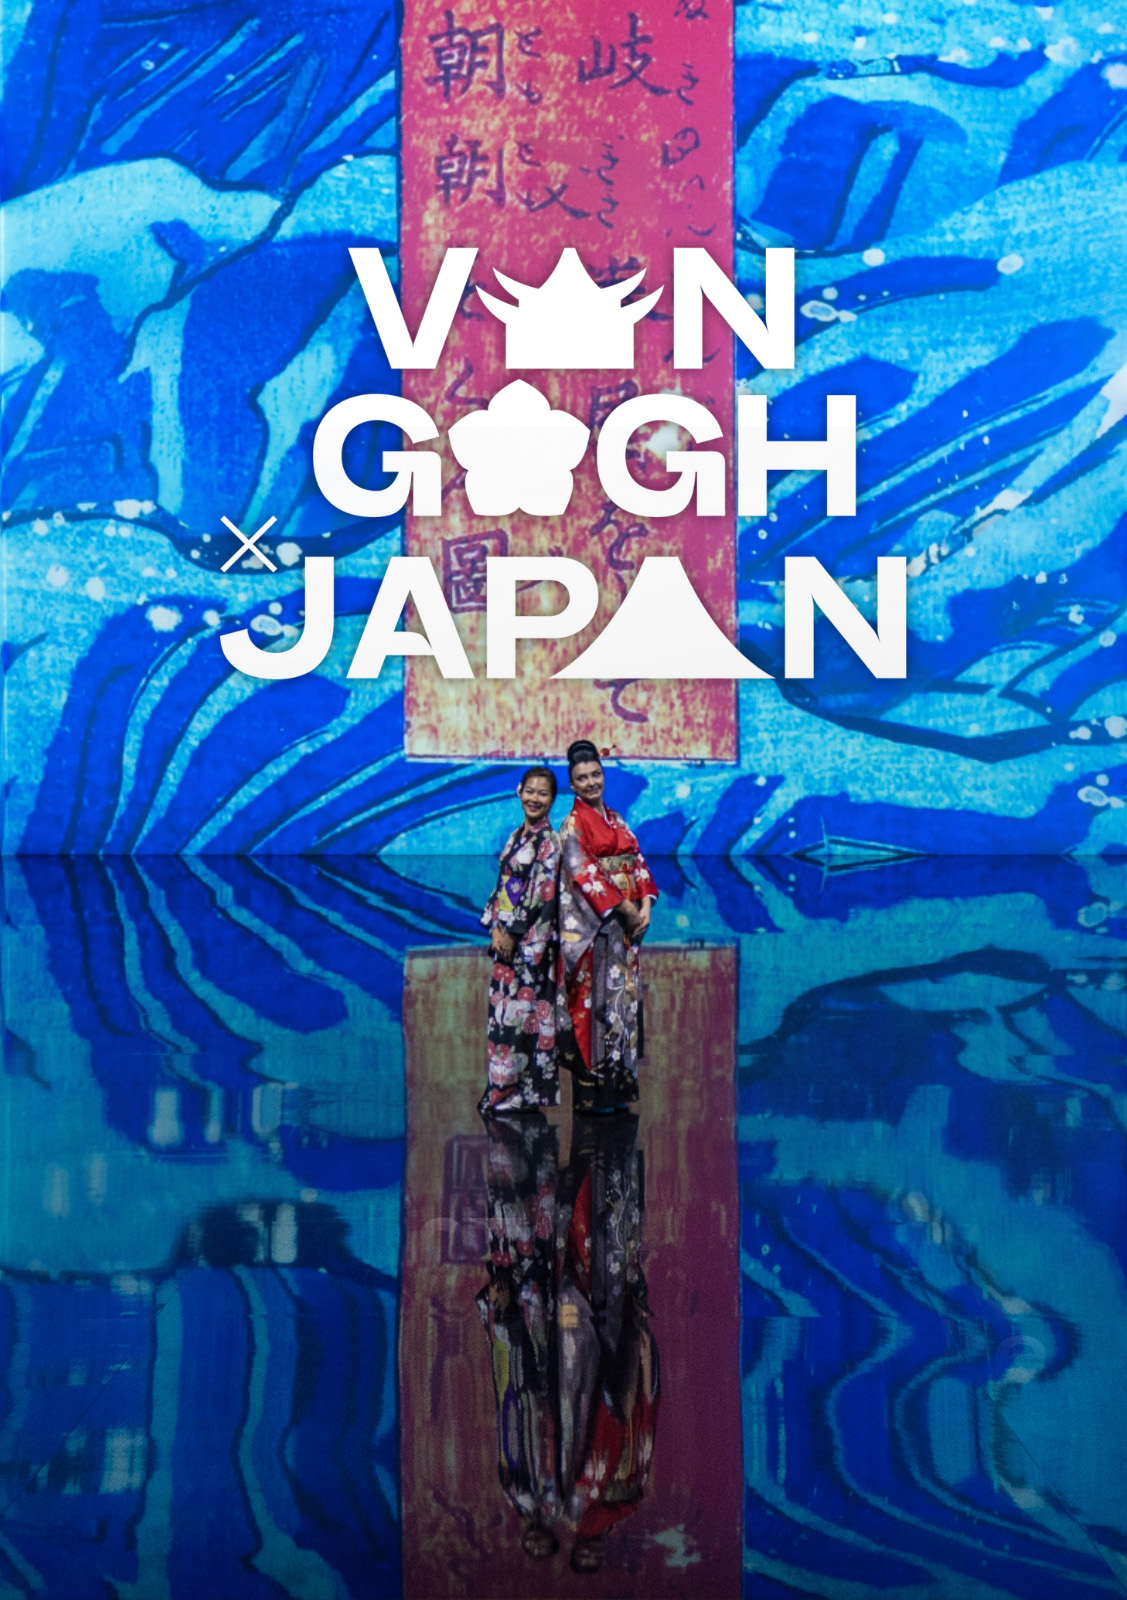 Van Gogh X Japan